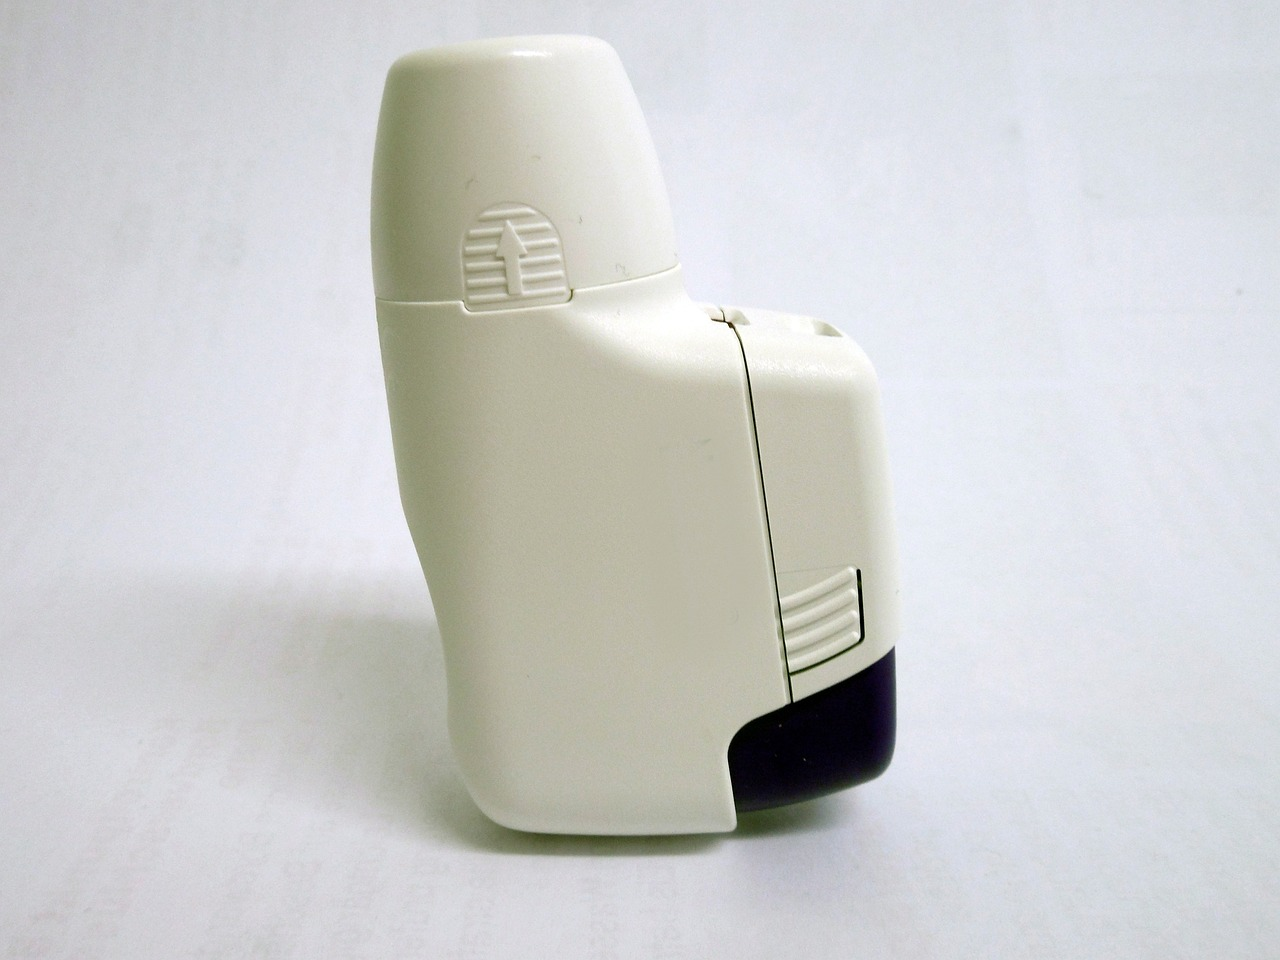 An image of an inhaler for allergies